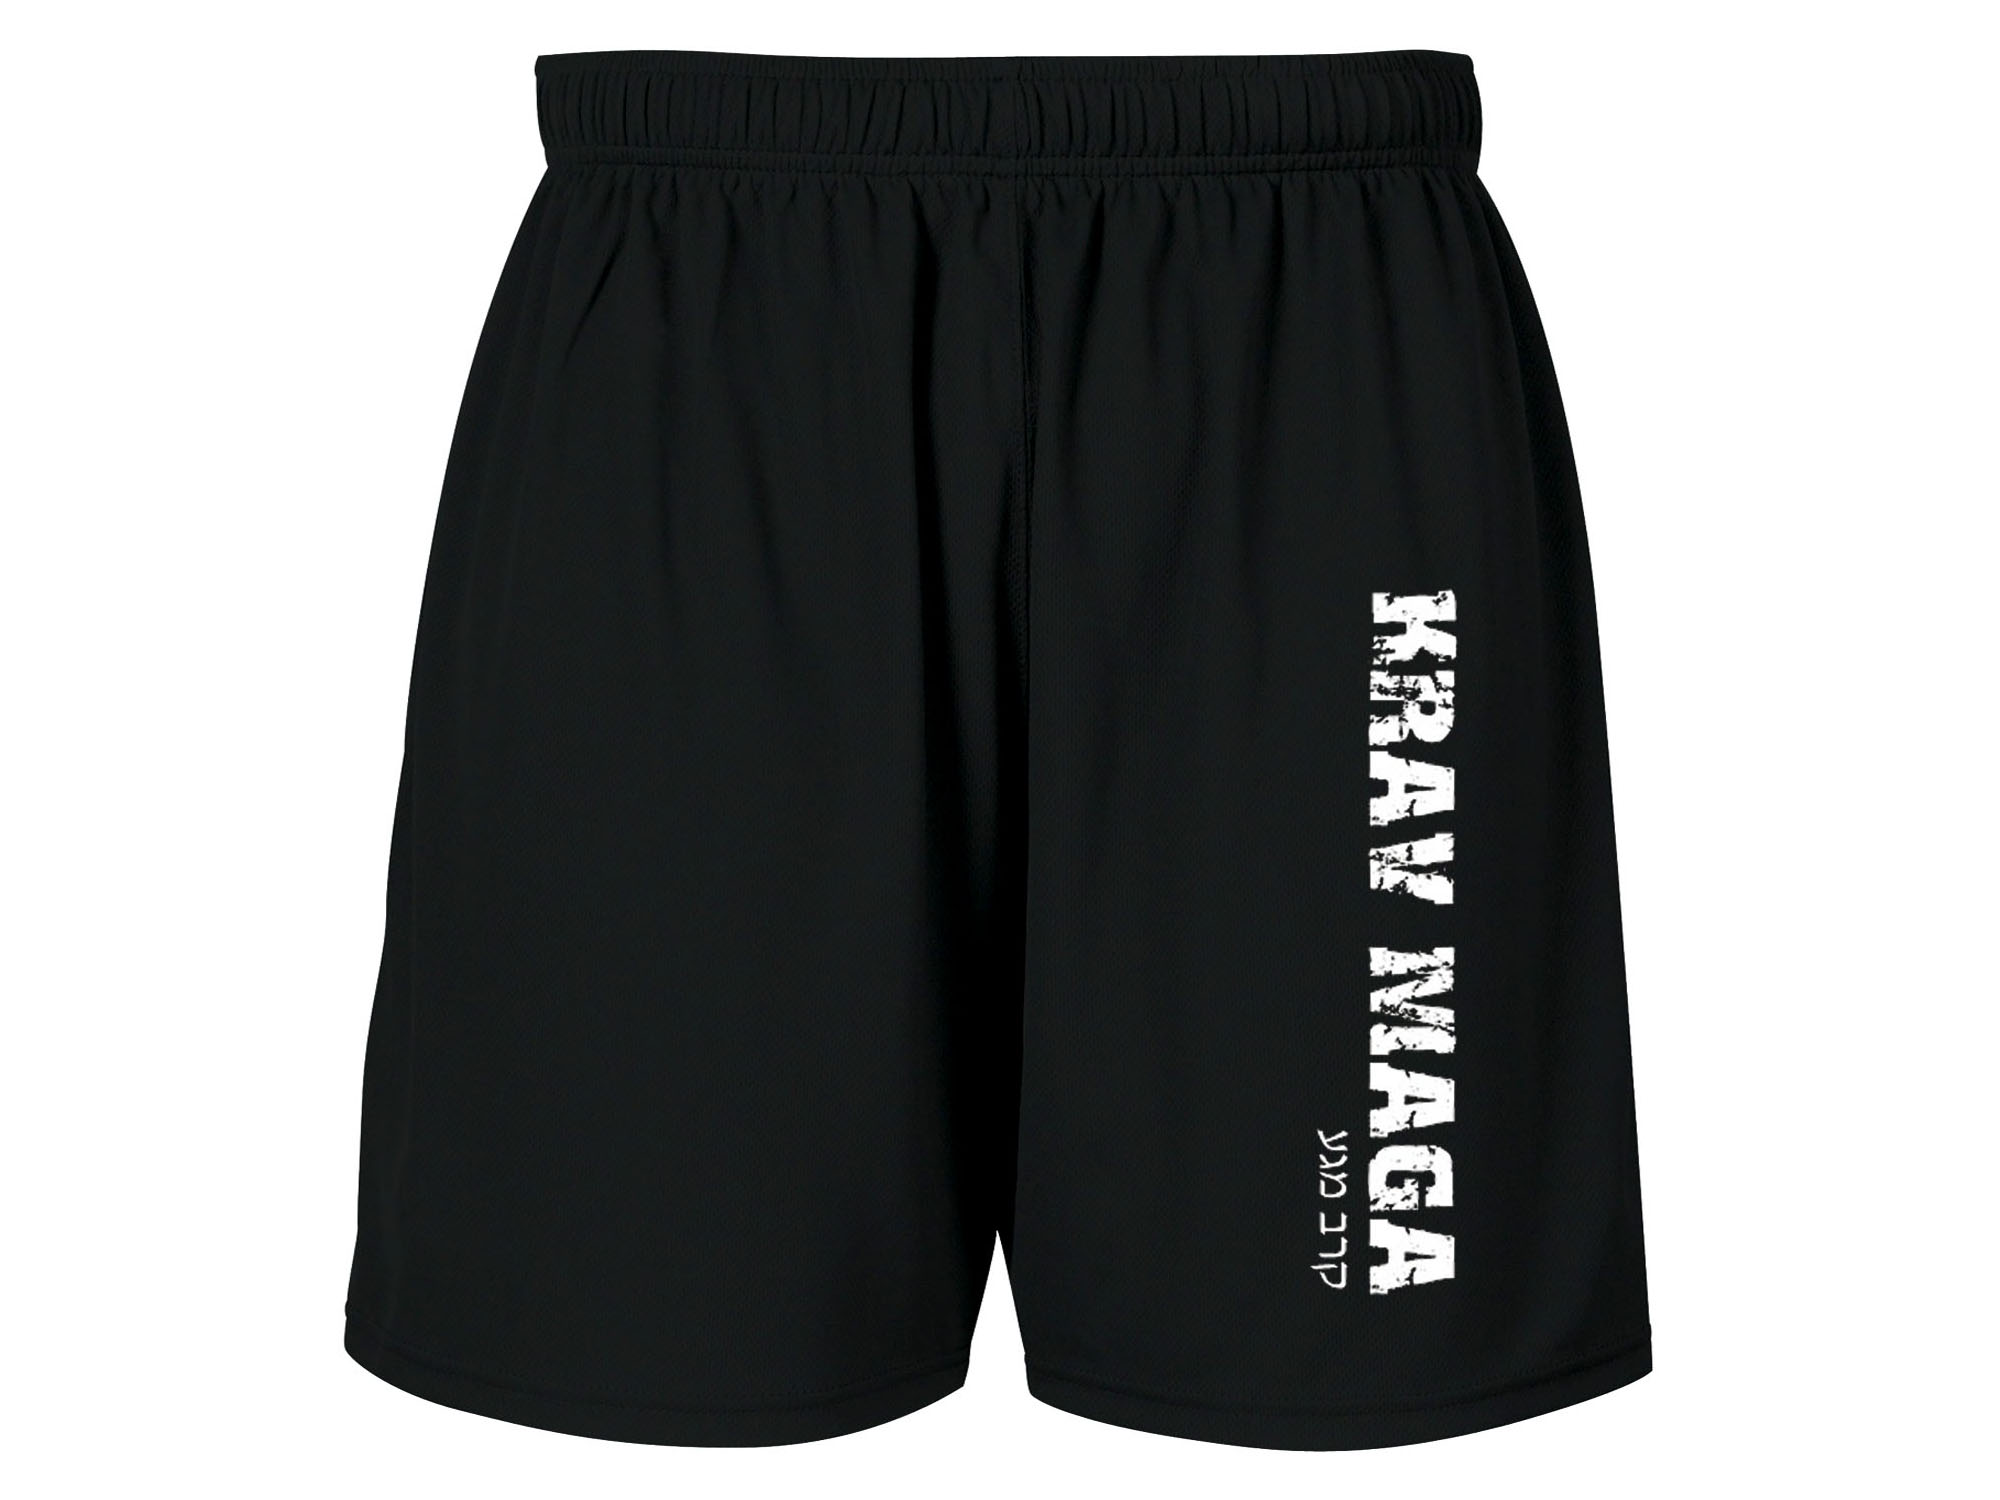 Krav Maga English/Hebrew distressed look black shorts 8